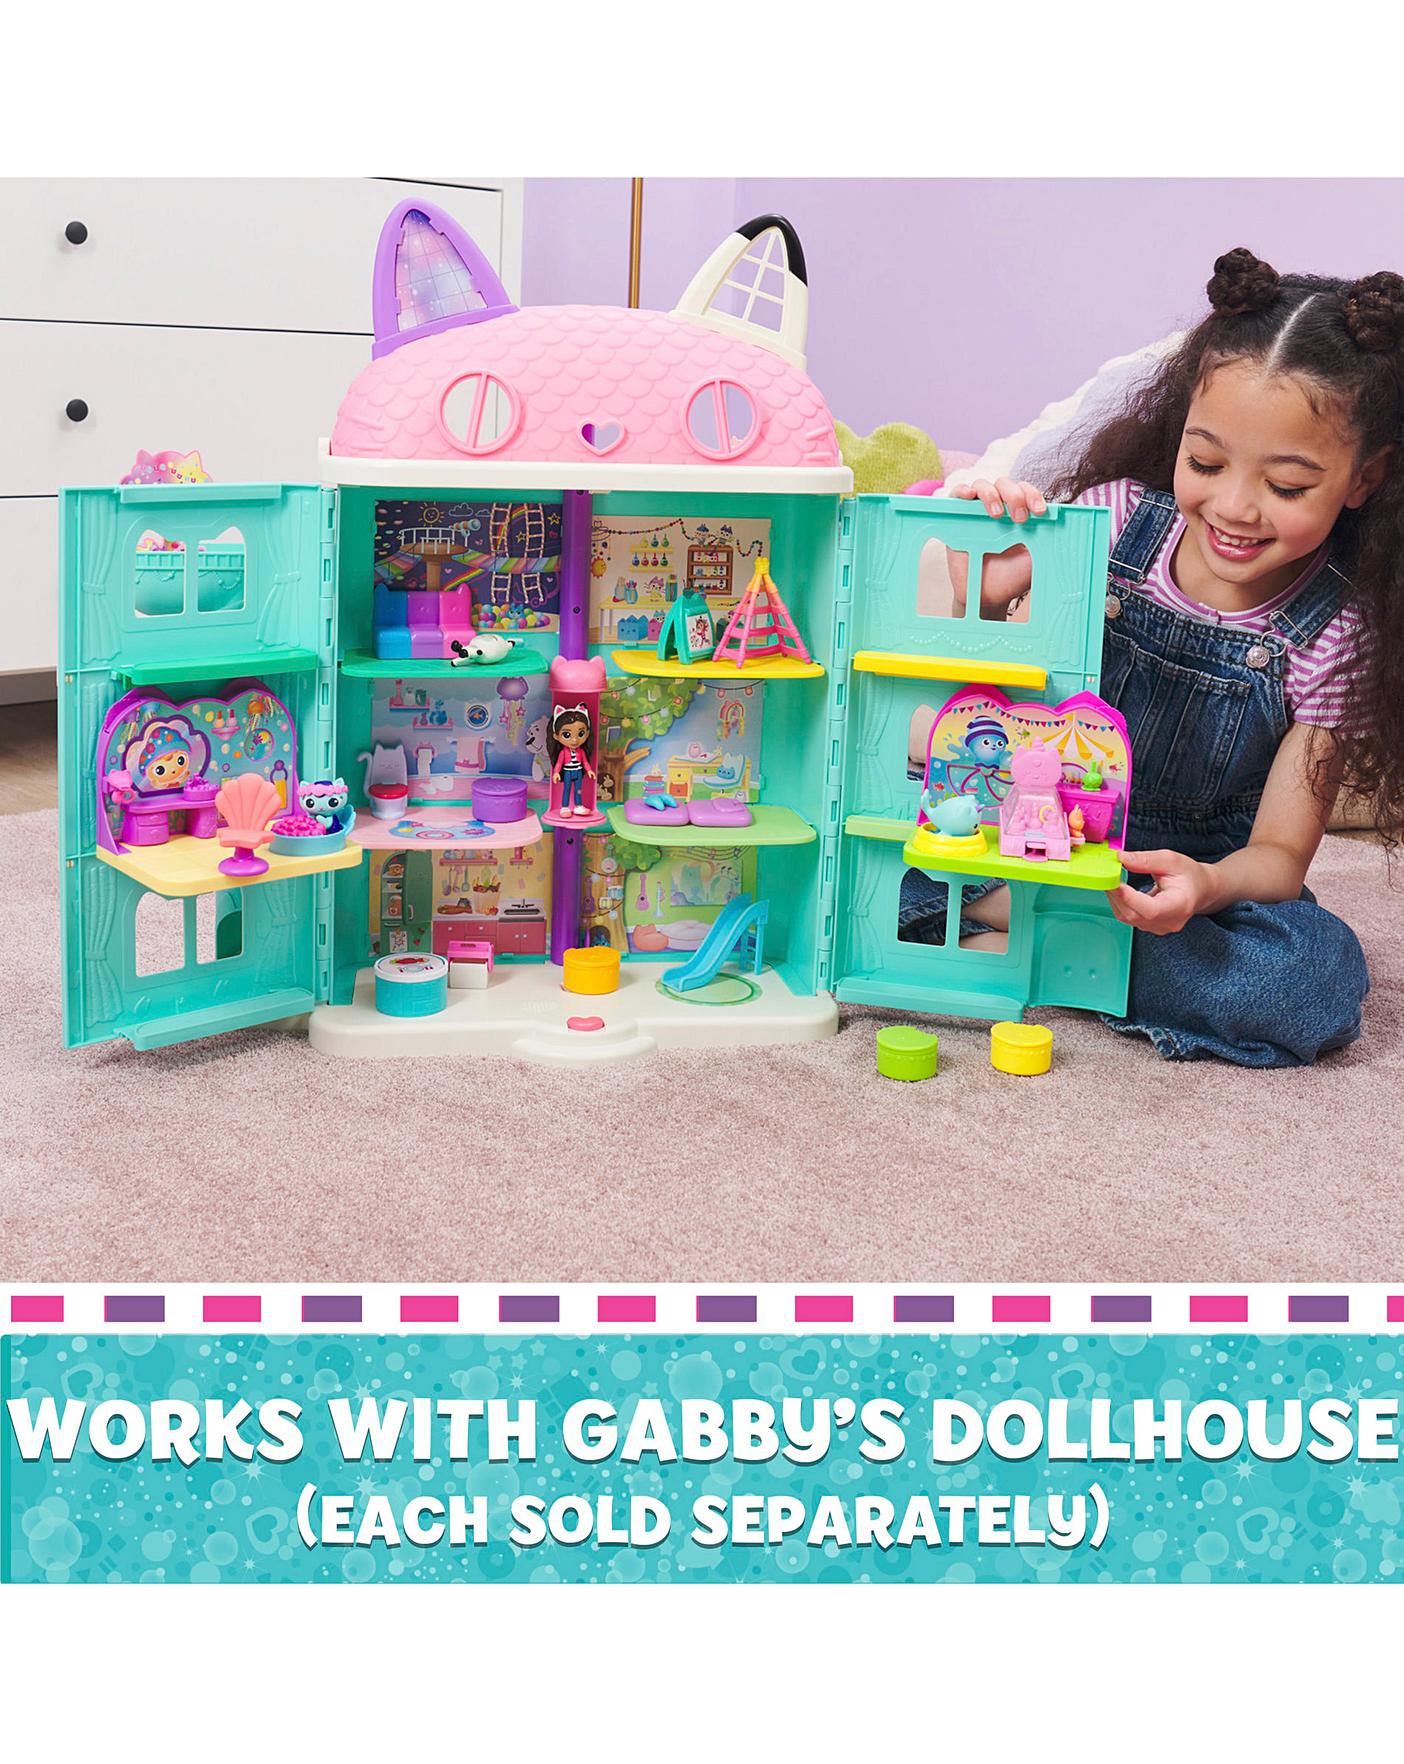 Gabbys Dollhouse Surprise Figure - Tesco Groceries